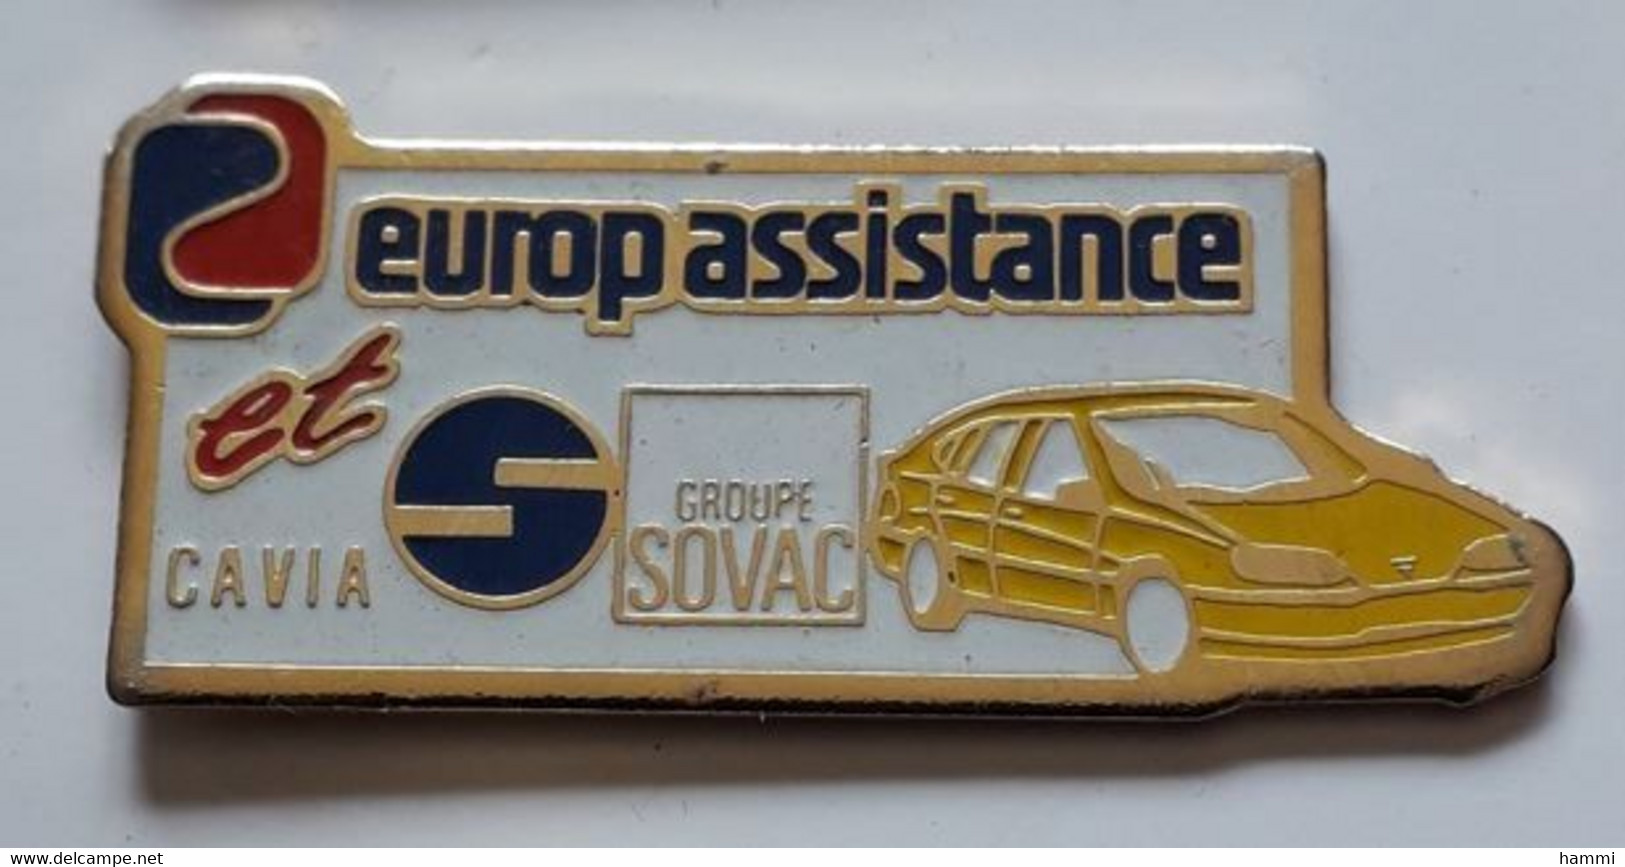 AA424 Pin's Europ Assistance Et Cavia Groupe Sovac Assurance Location Auto Renault Citroën Achat Immédiat - Administrations